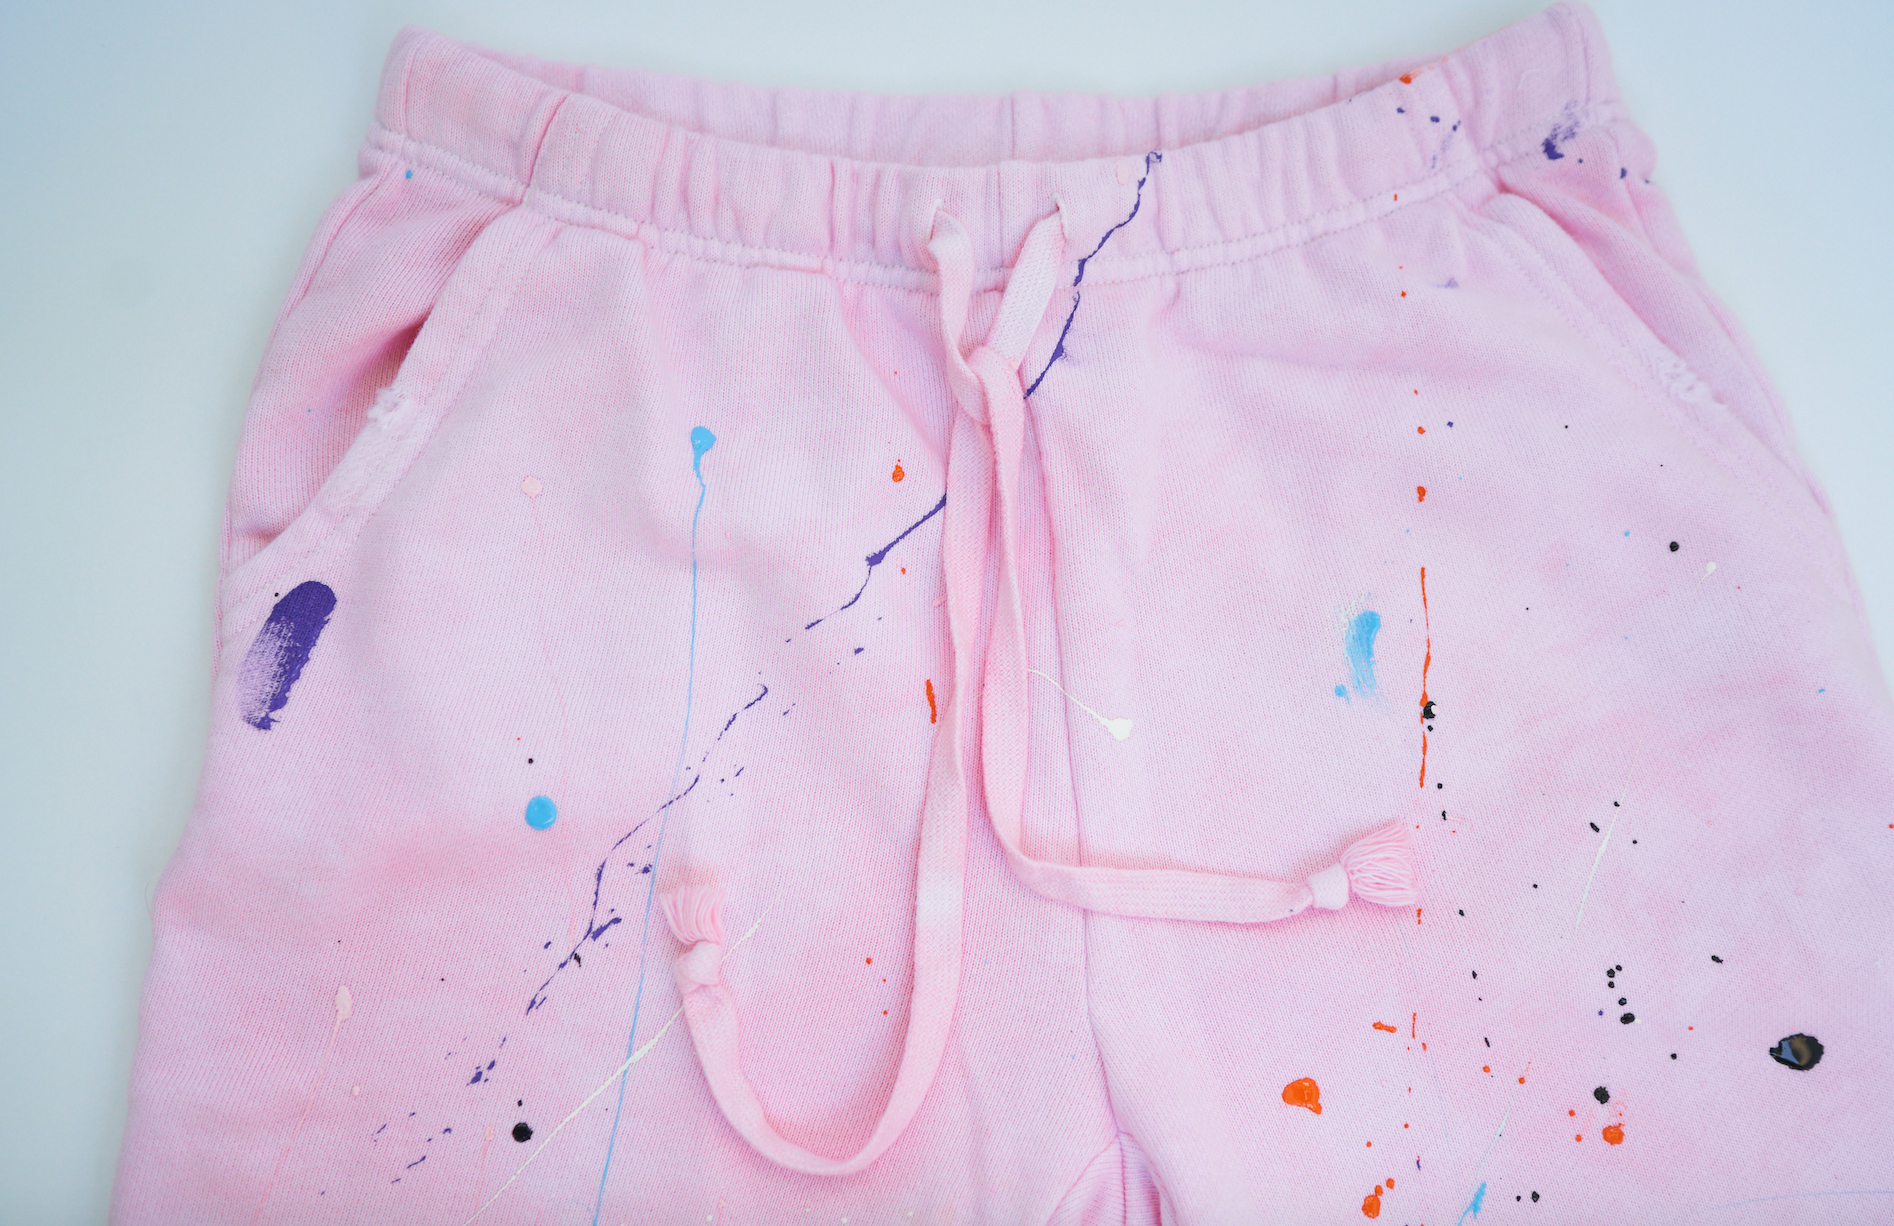 Pink Dyed Paint Splatter Vintage Sweat Short